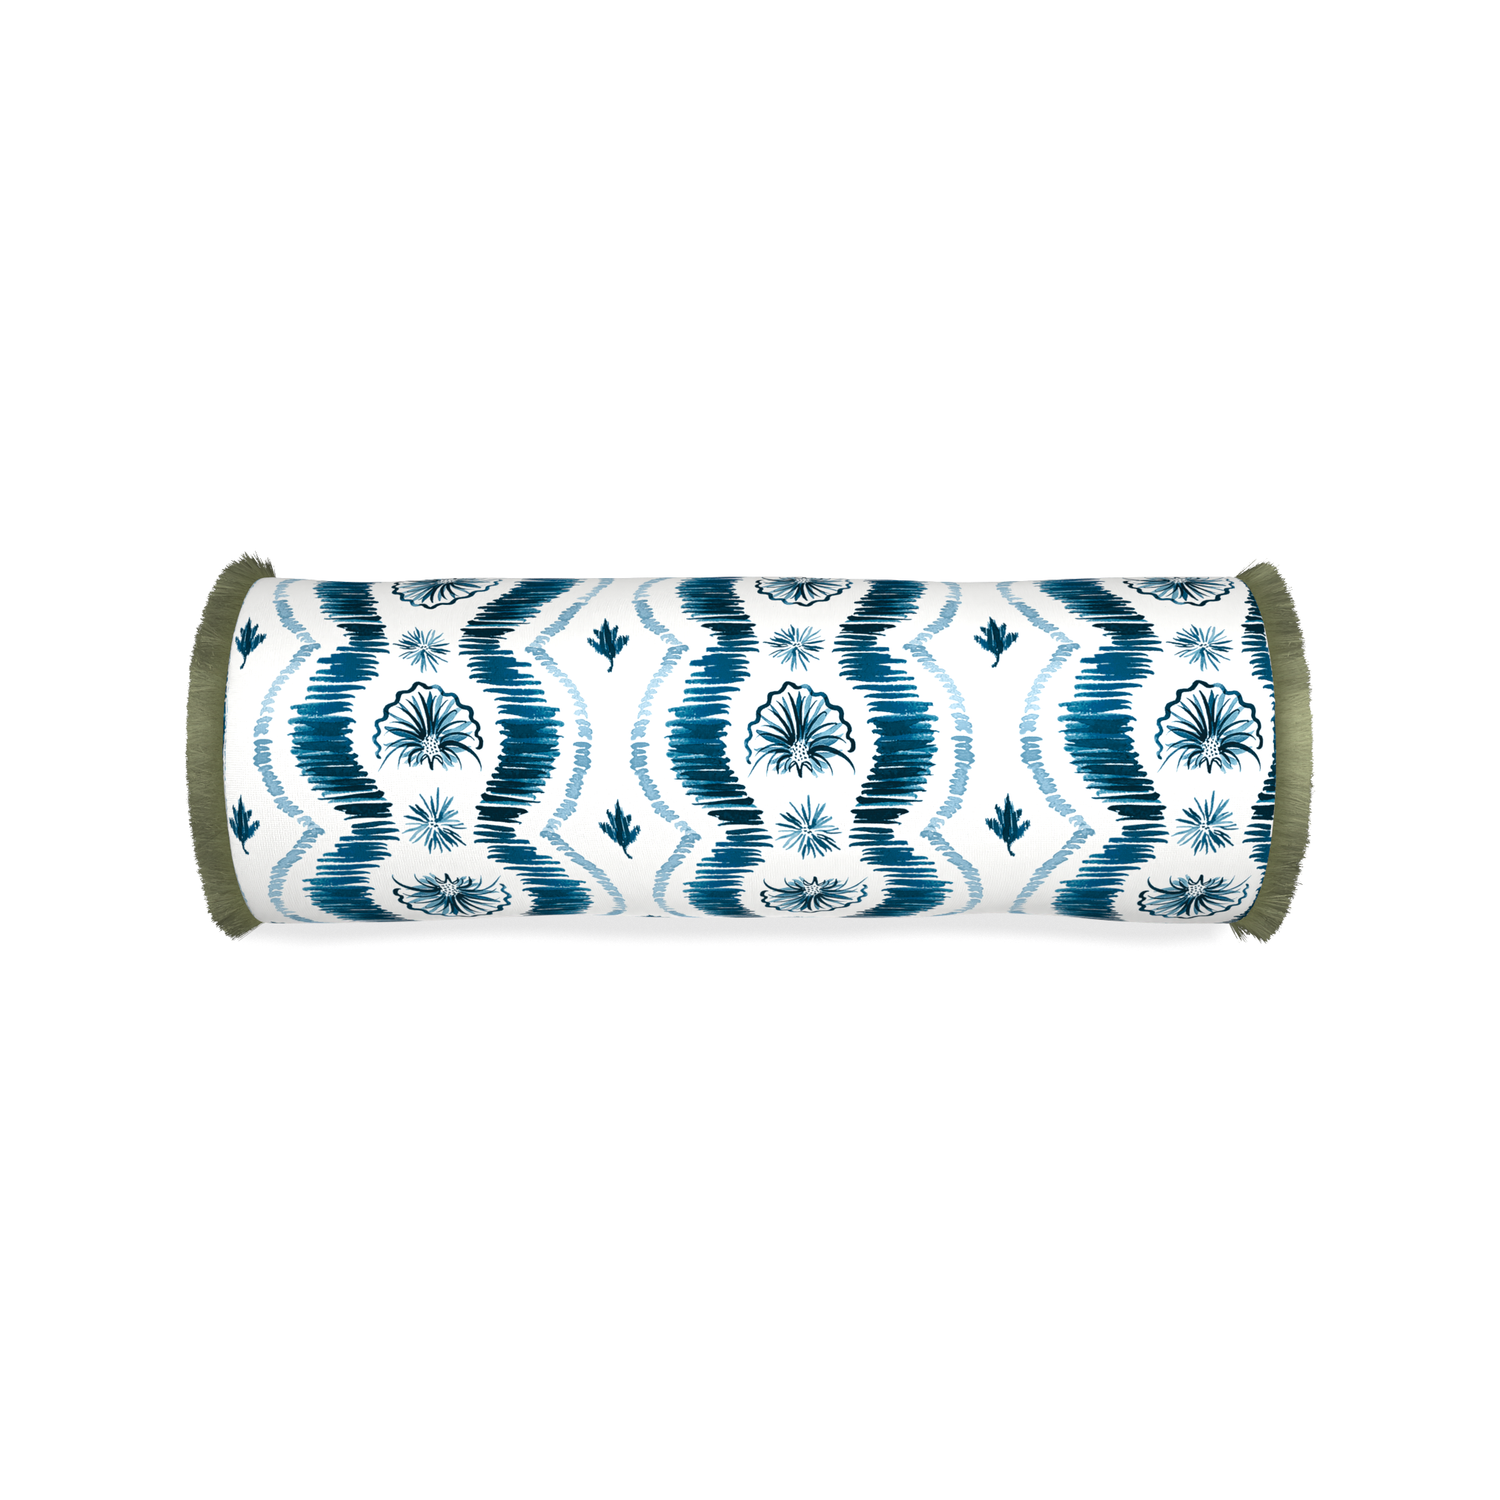 Bolster alice custom blue ikatpillow with sage fringe on white background